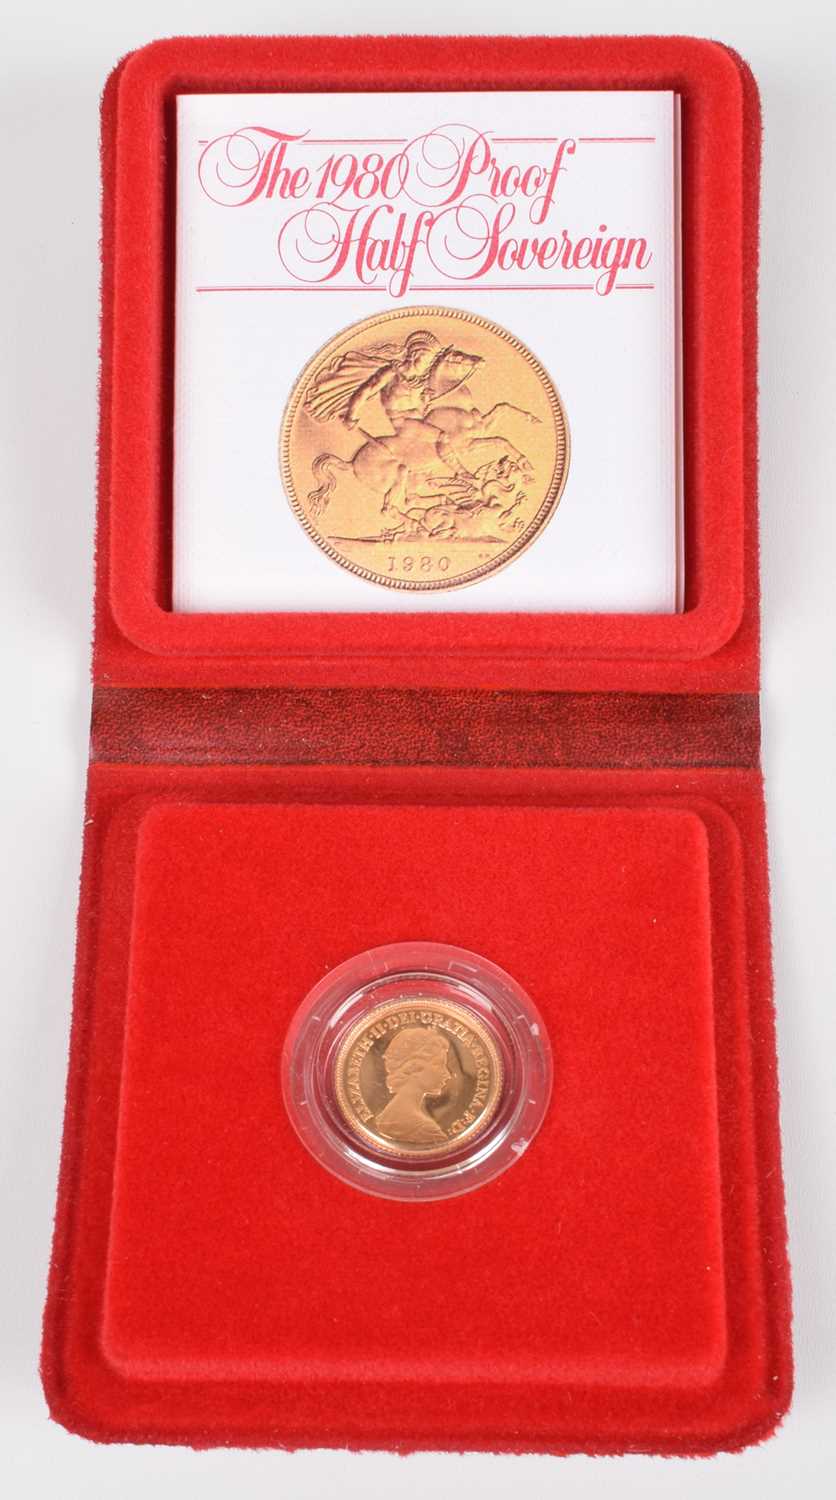 Lot 91 - 1980 Royal Mint, Proof Half-Sovereign.